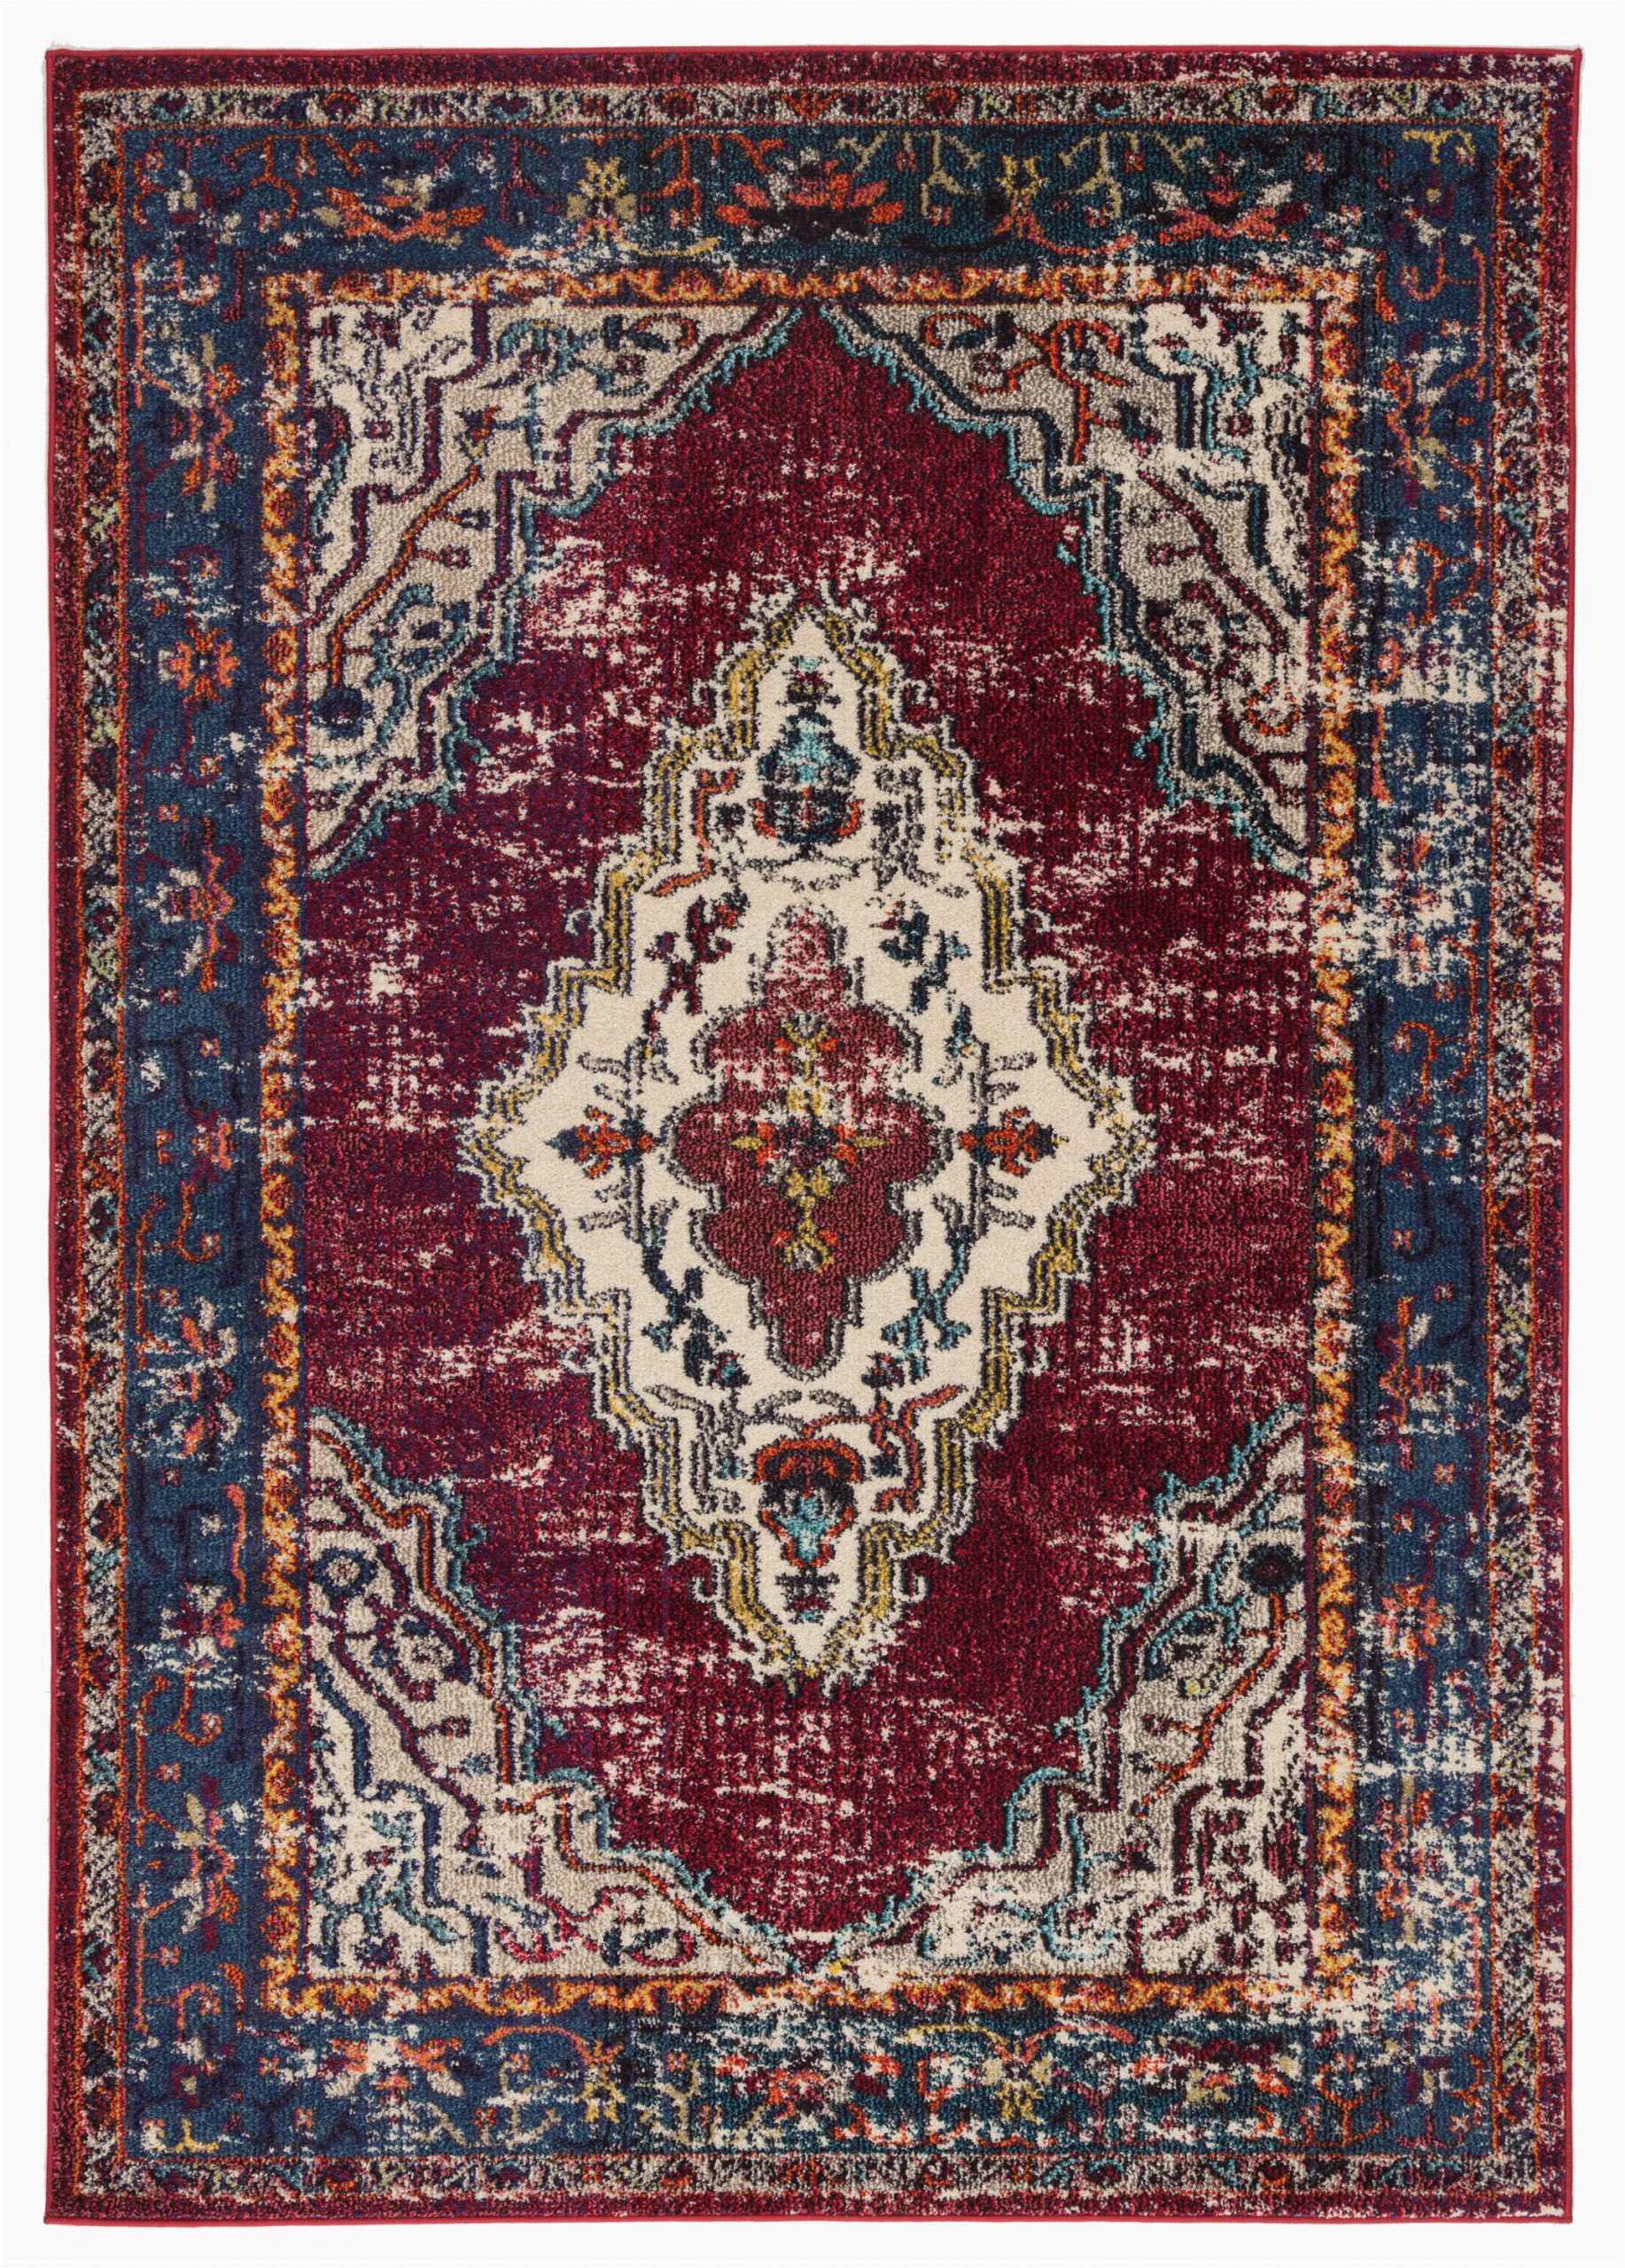 avianna persian inspired medallion maroonbluebrown area rug